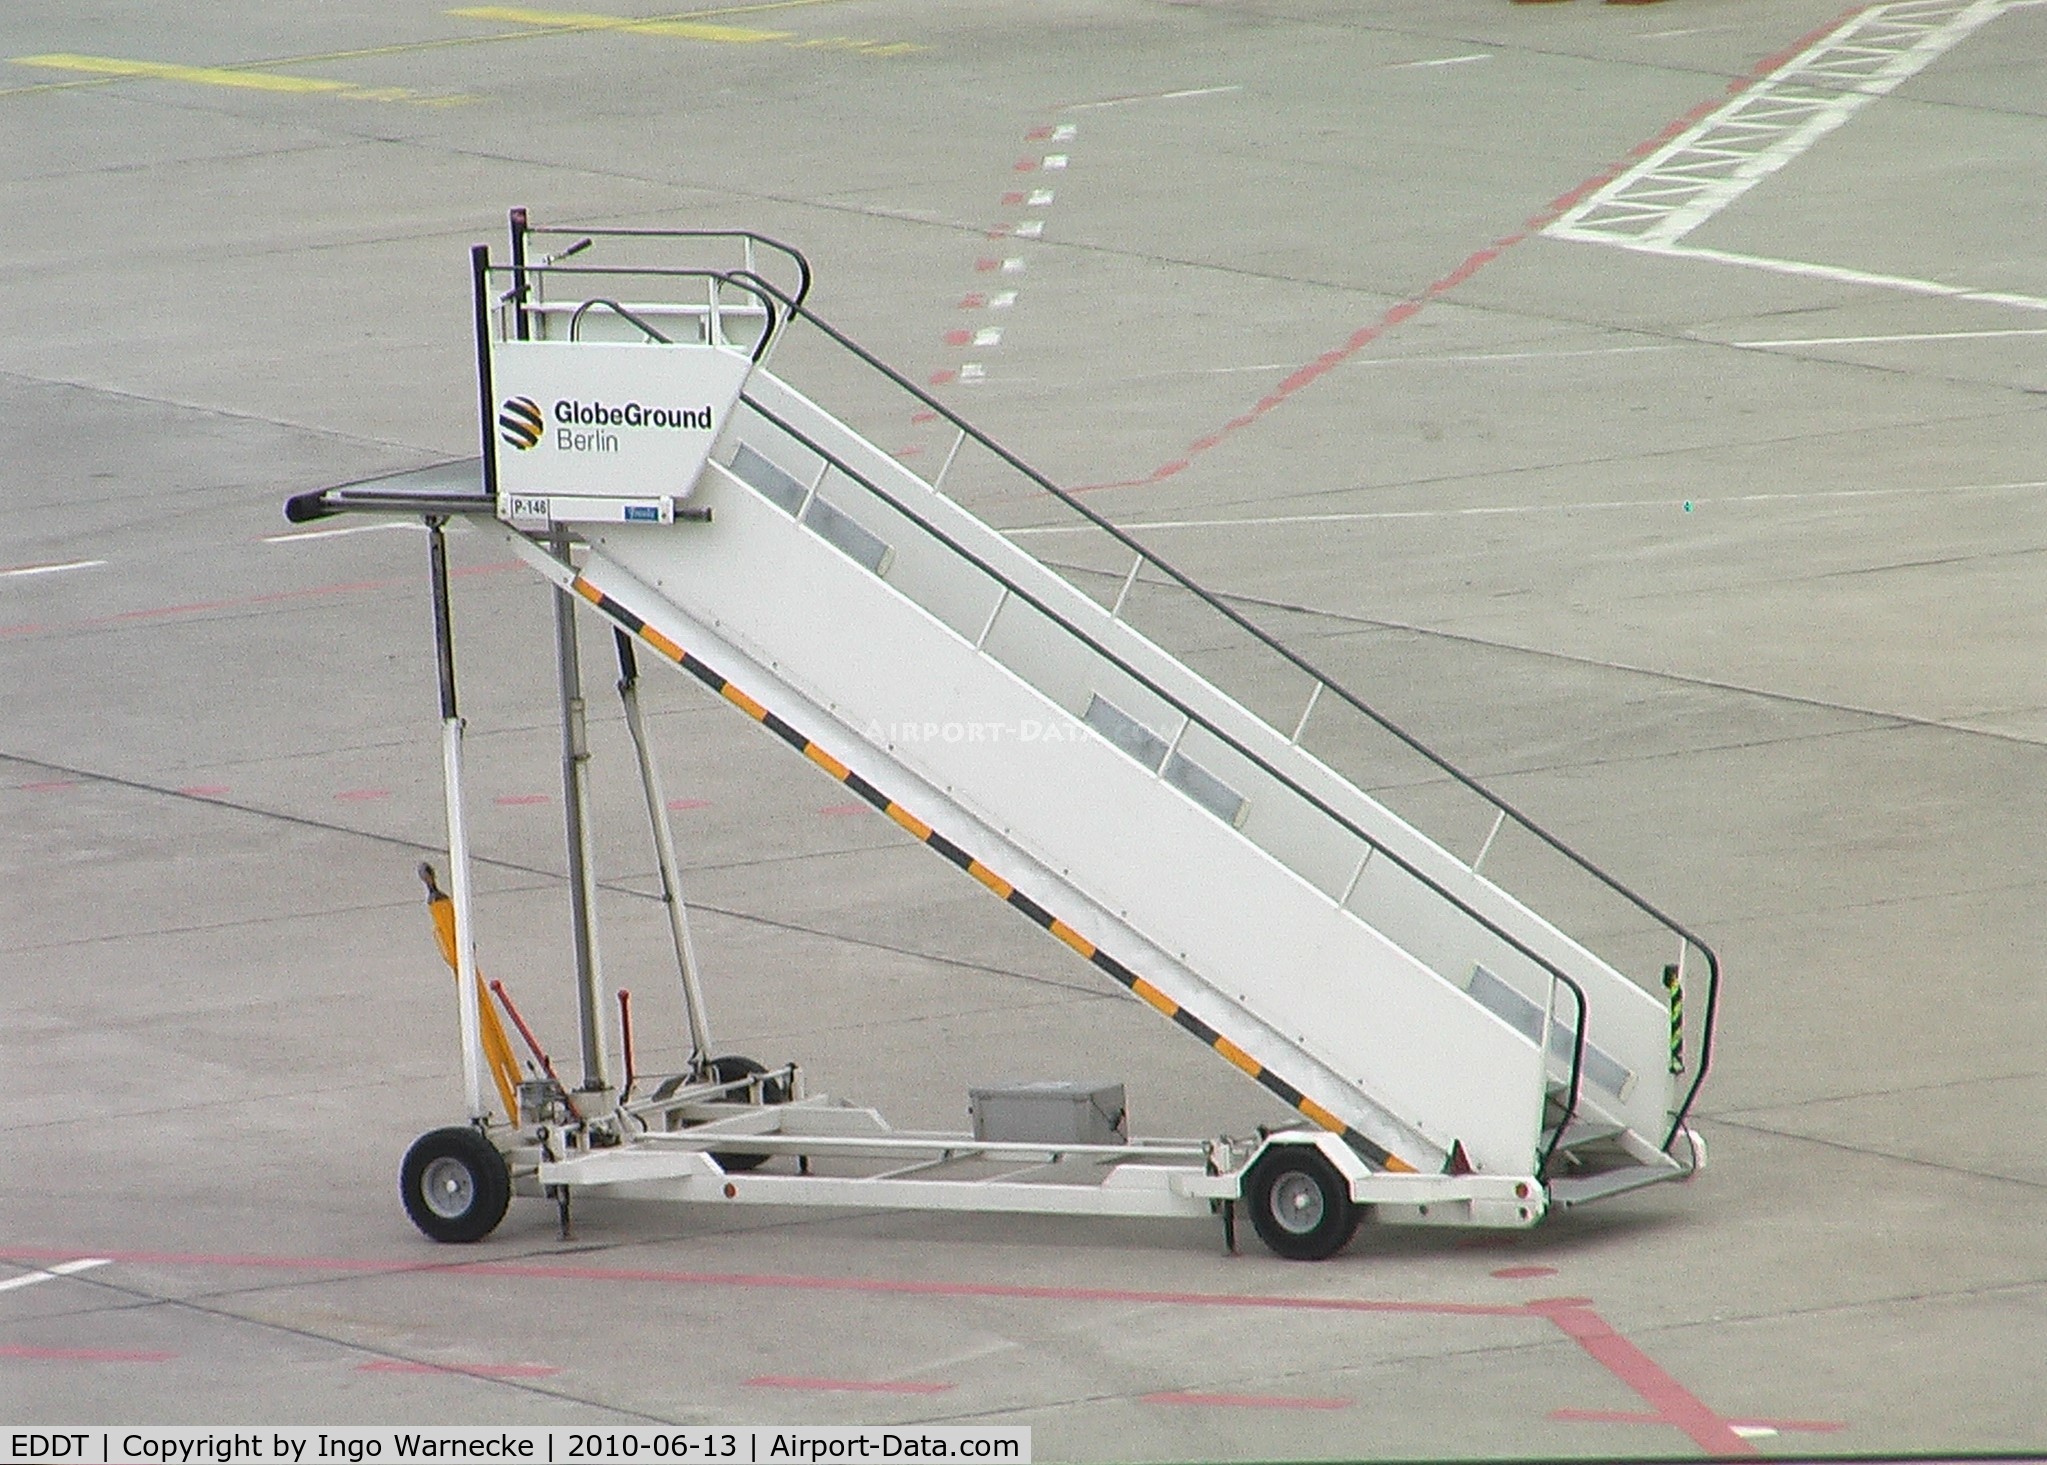 Tegel International Airport (closing in 2011), Berlin Germany (EDDT) - towed open boarding stairs at Tegel airport